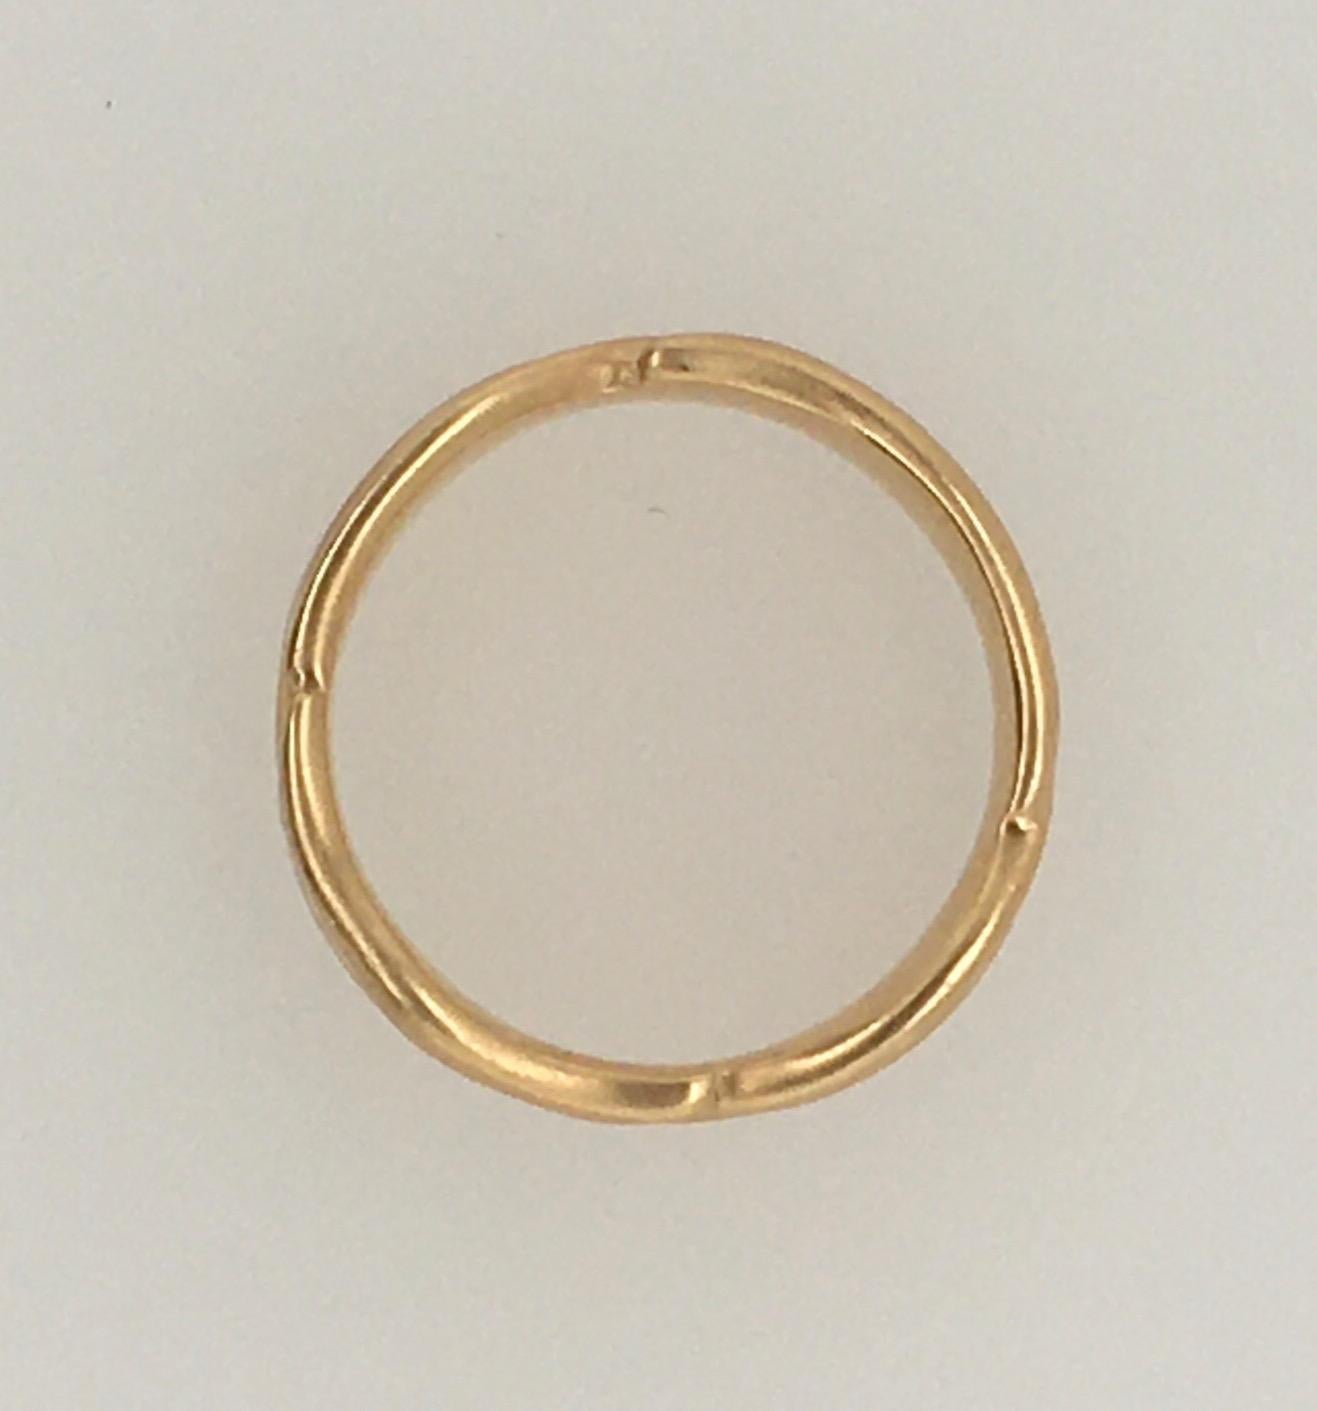 JENNIFER SHIGETOMI Stylized Gold Leaf & Vine Satin Finish Guinevere Ring For Sale 3